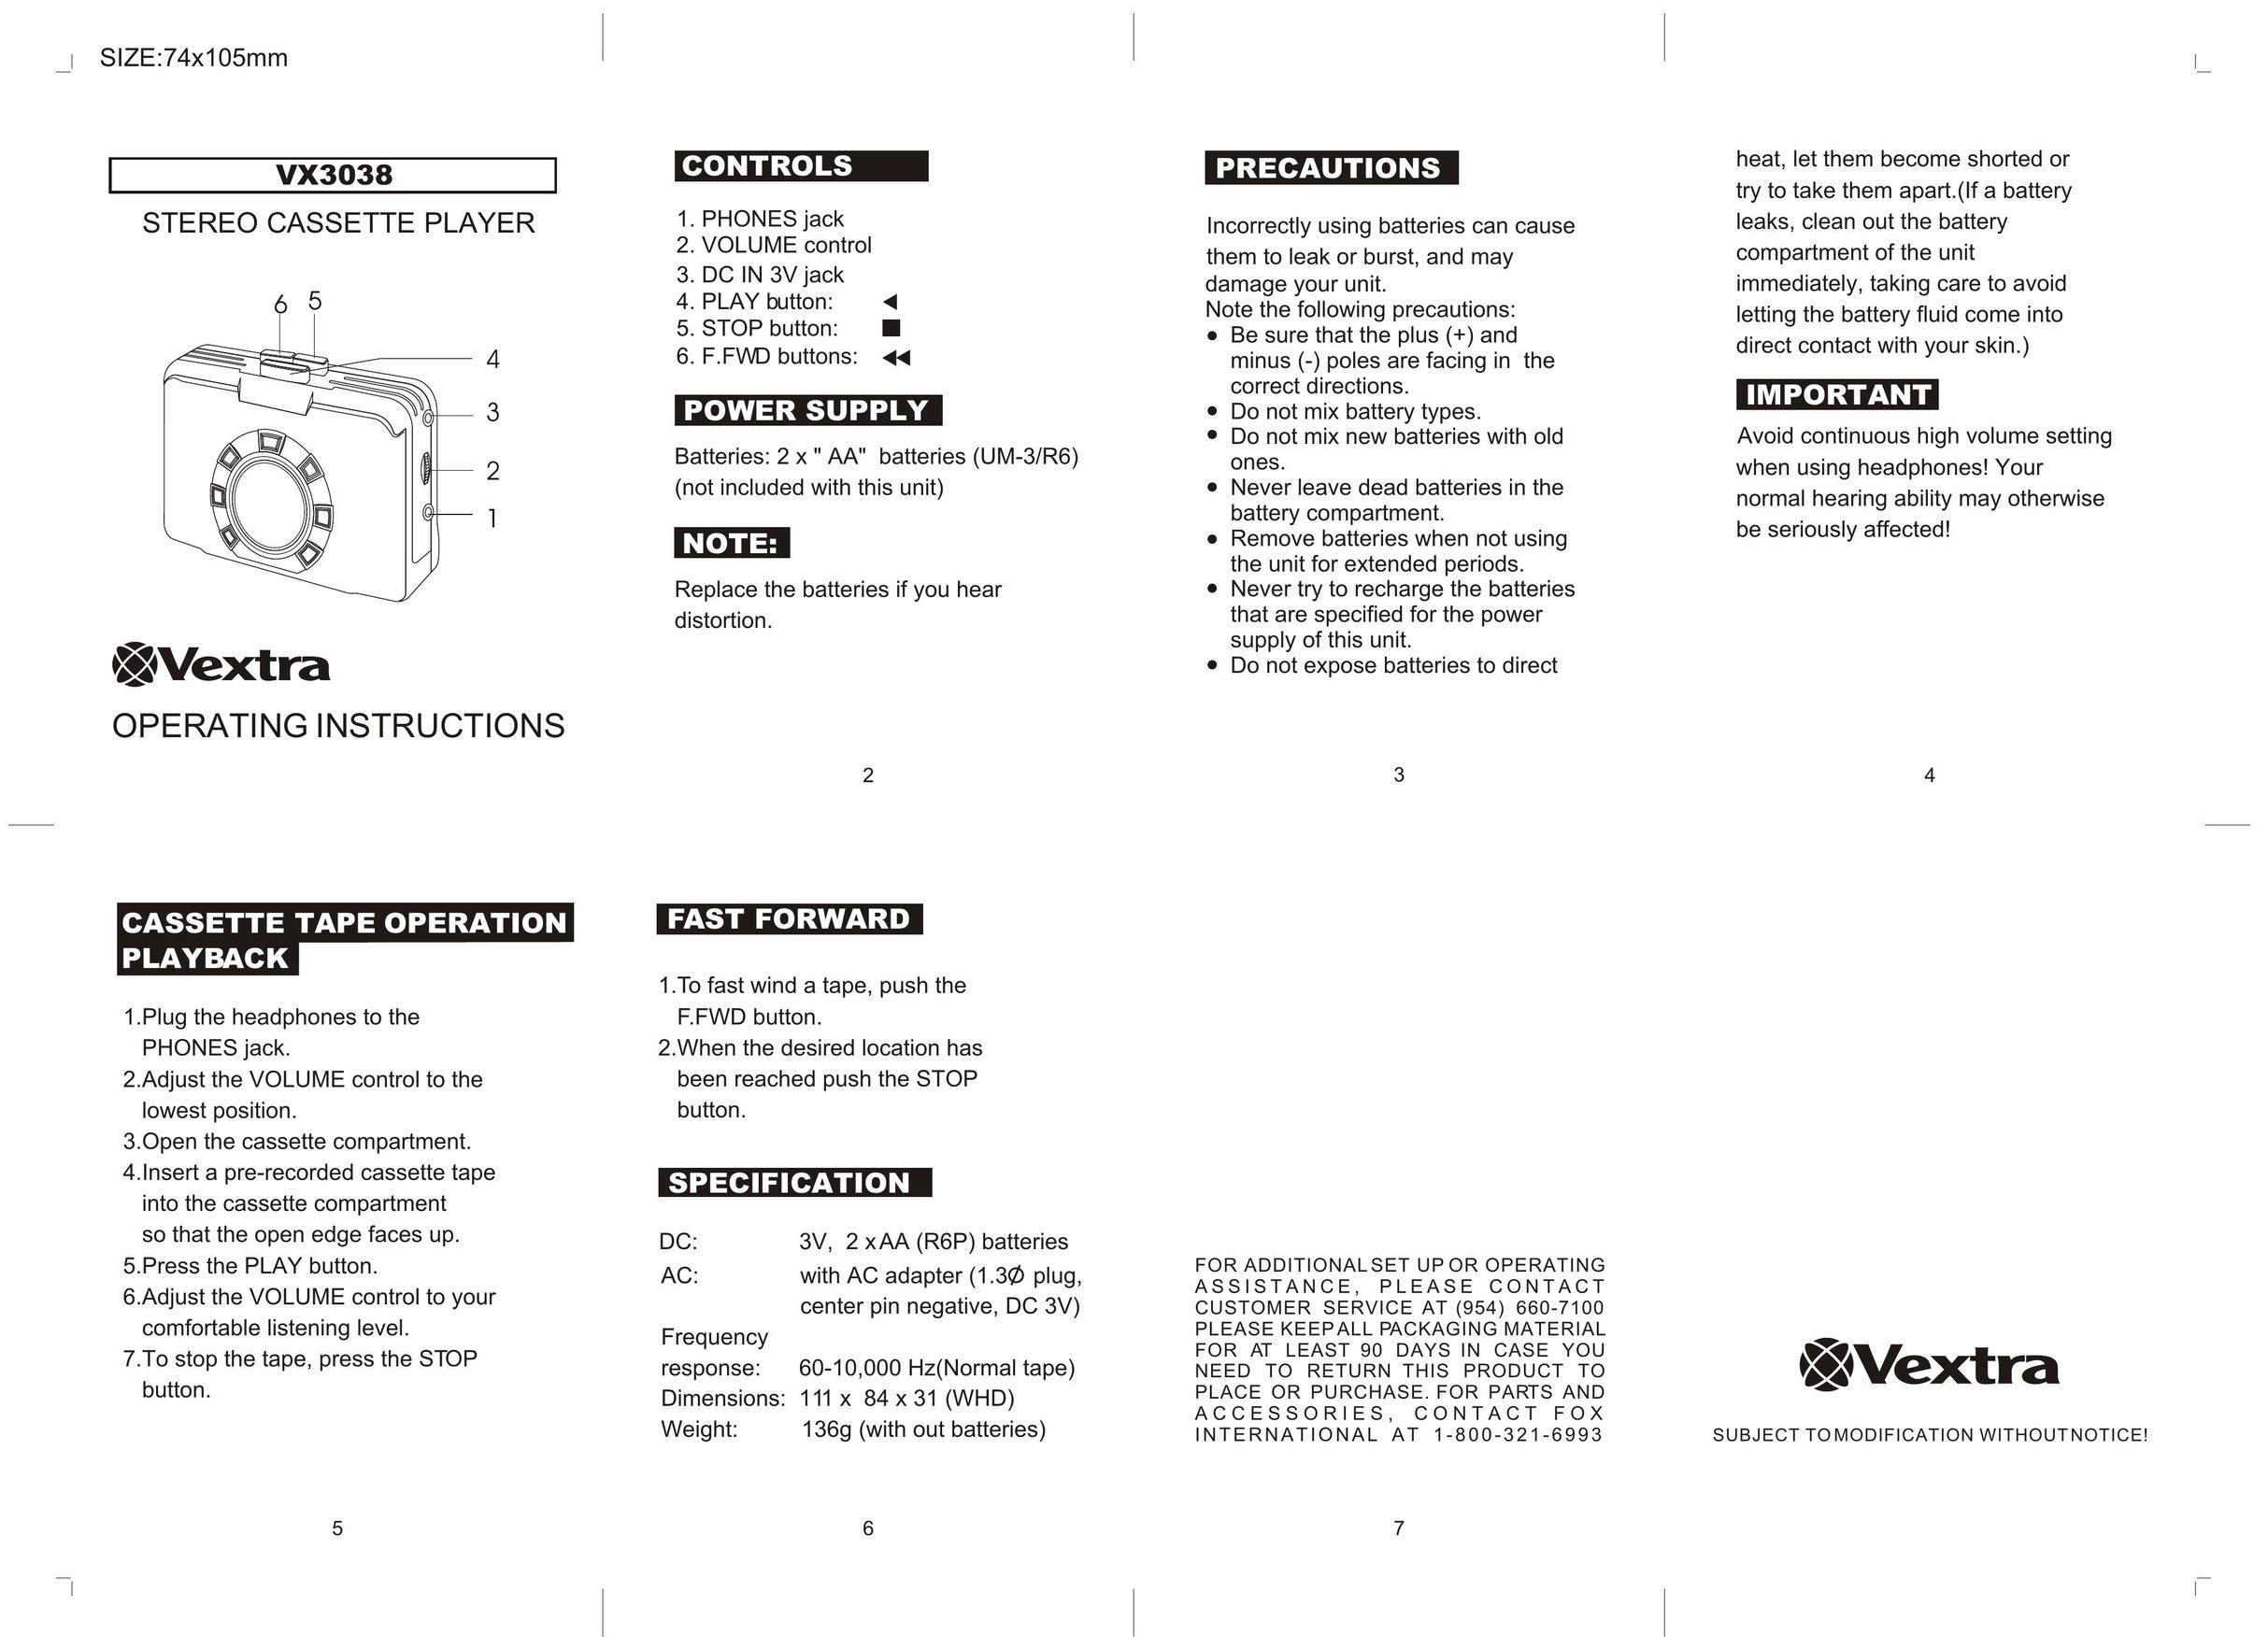 Memorex VX3038 VCR User Manual